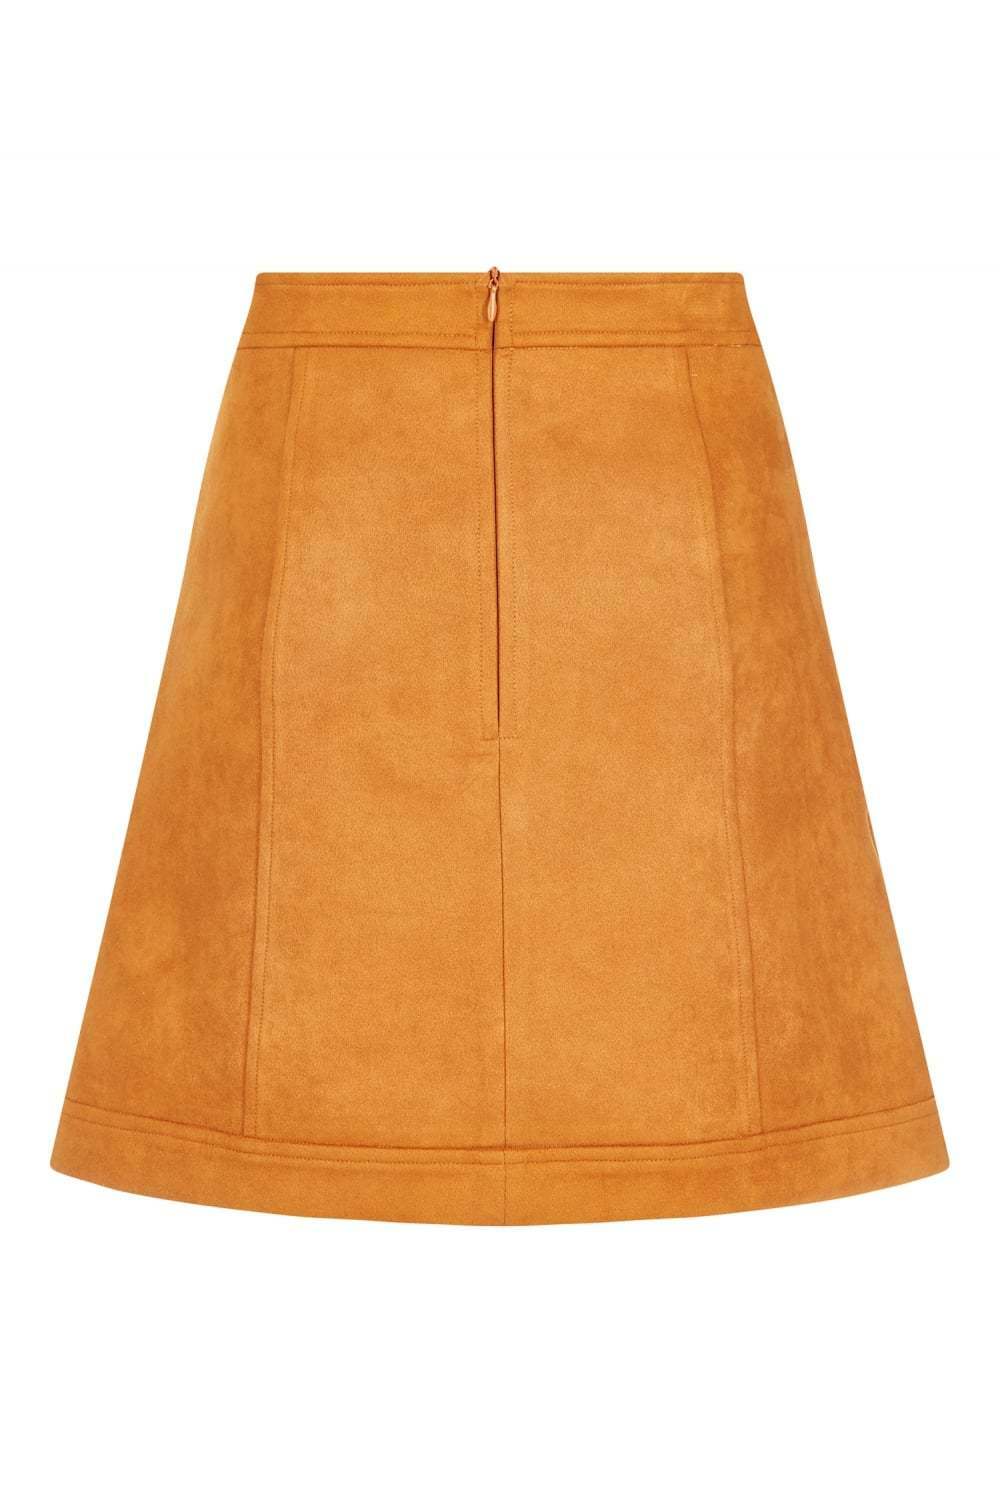 Vintage Rust Lilca Lace Up Short Skirt